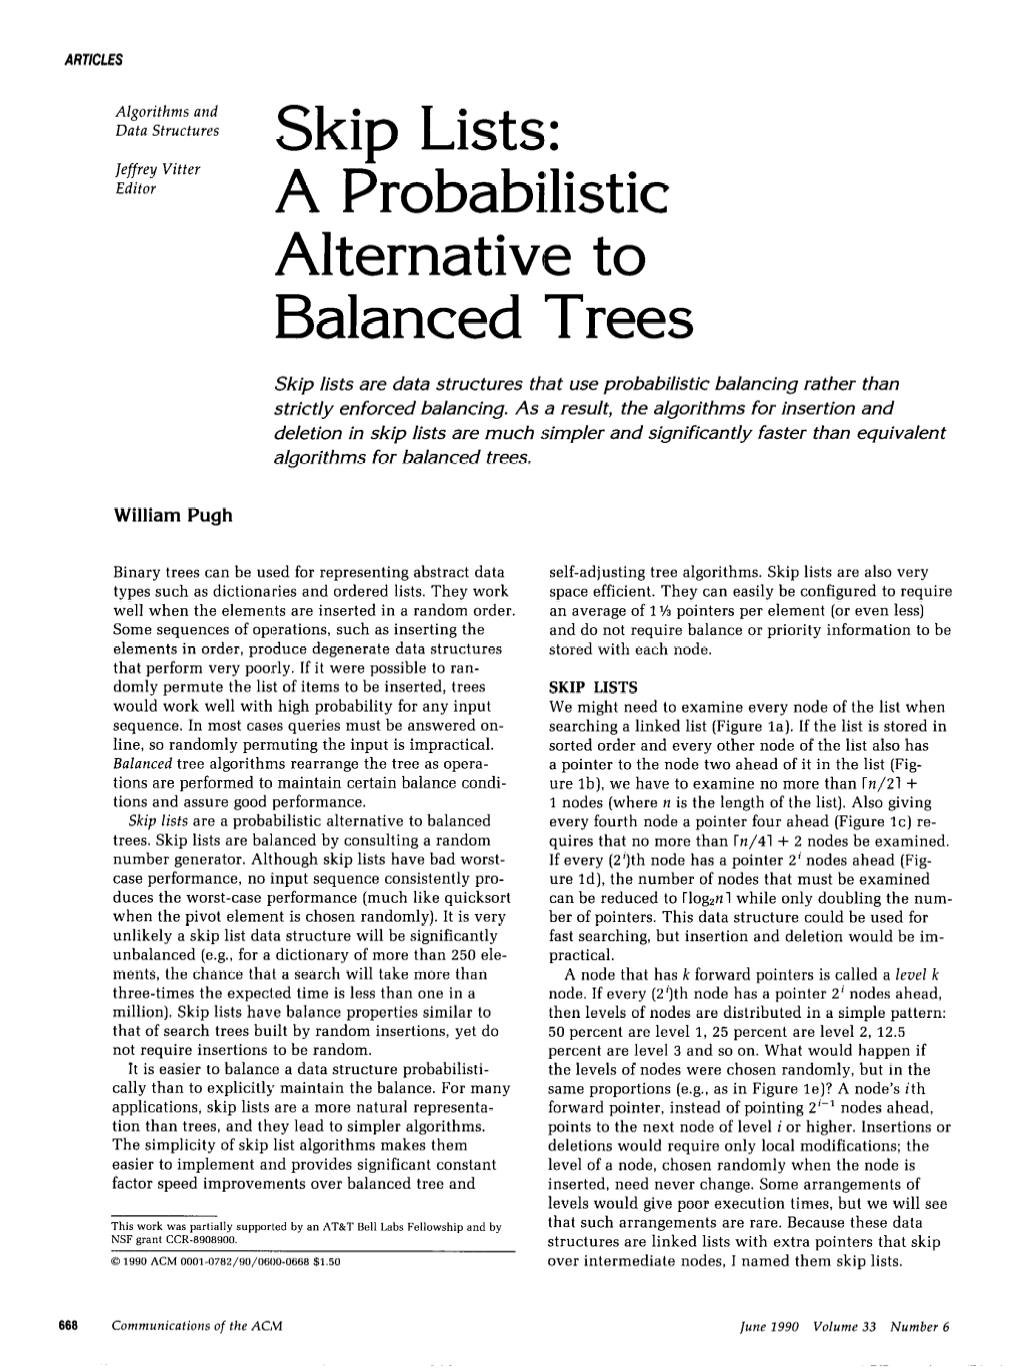 Skip Lists: a Probabilistic Alternative to Balanced Trees